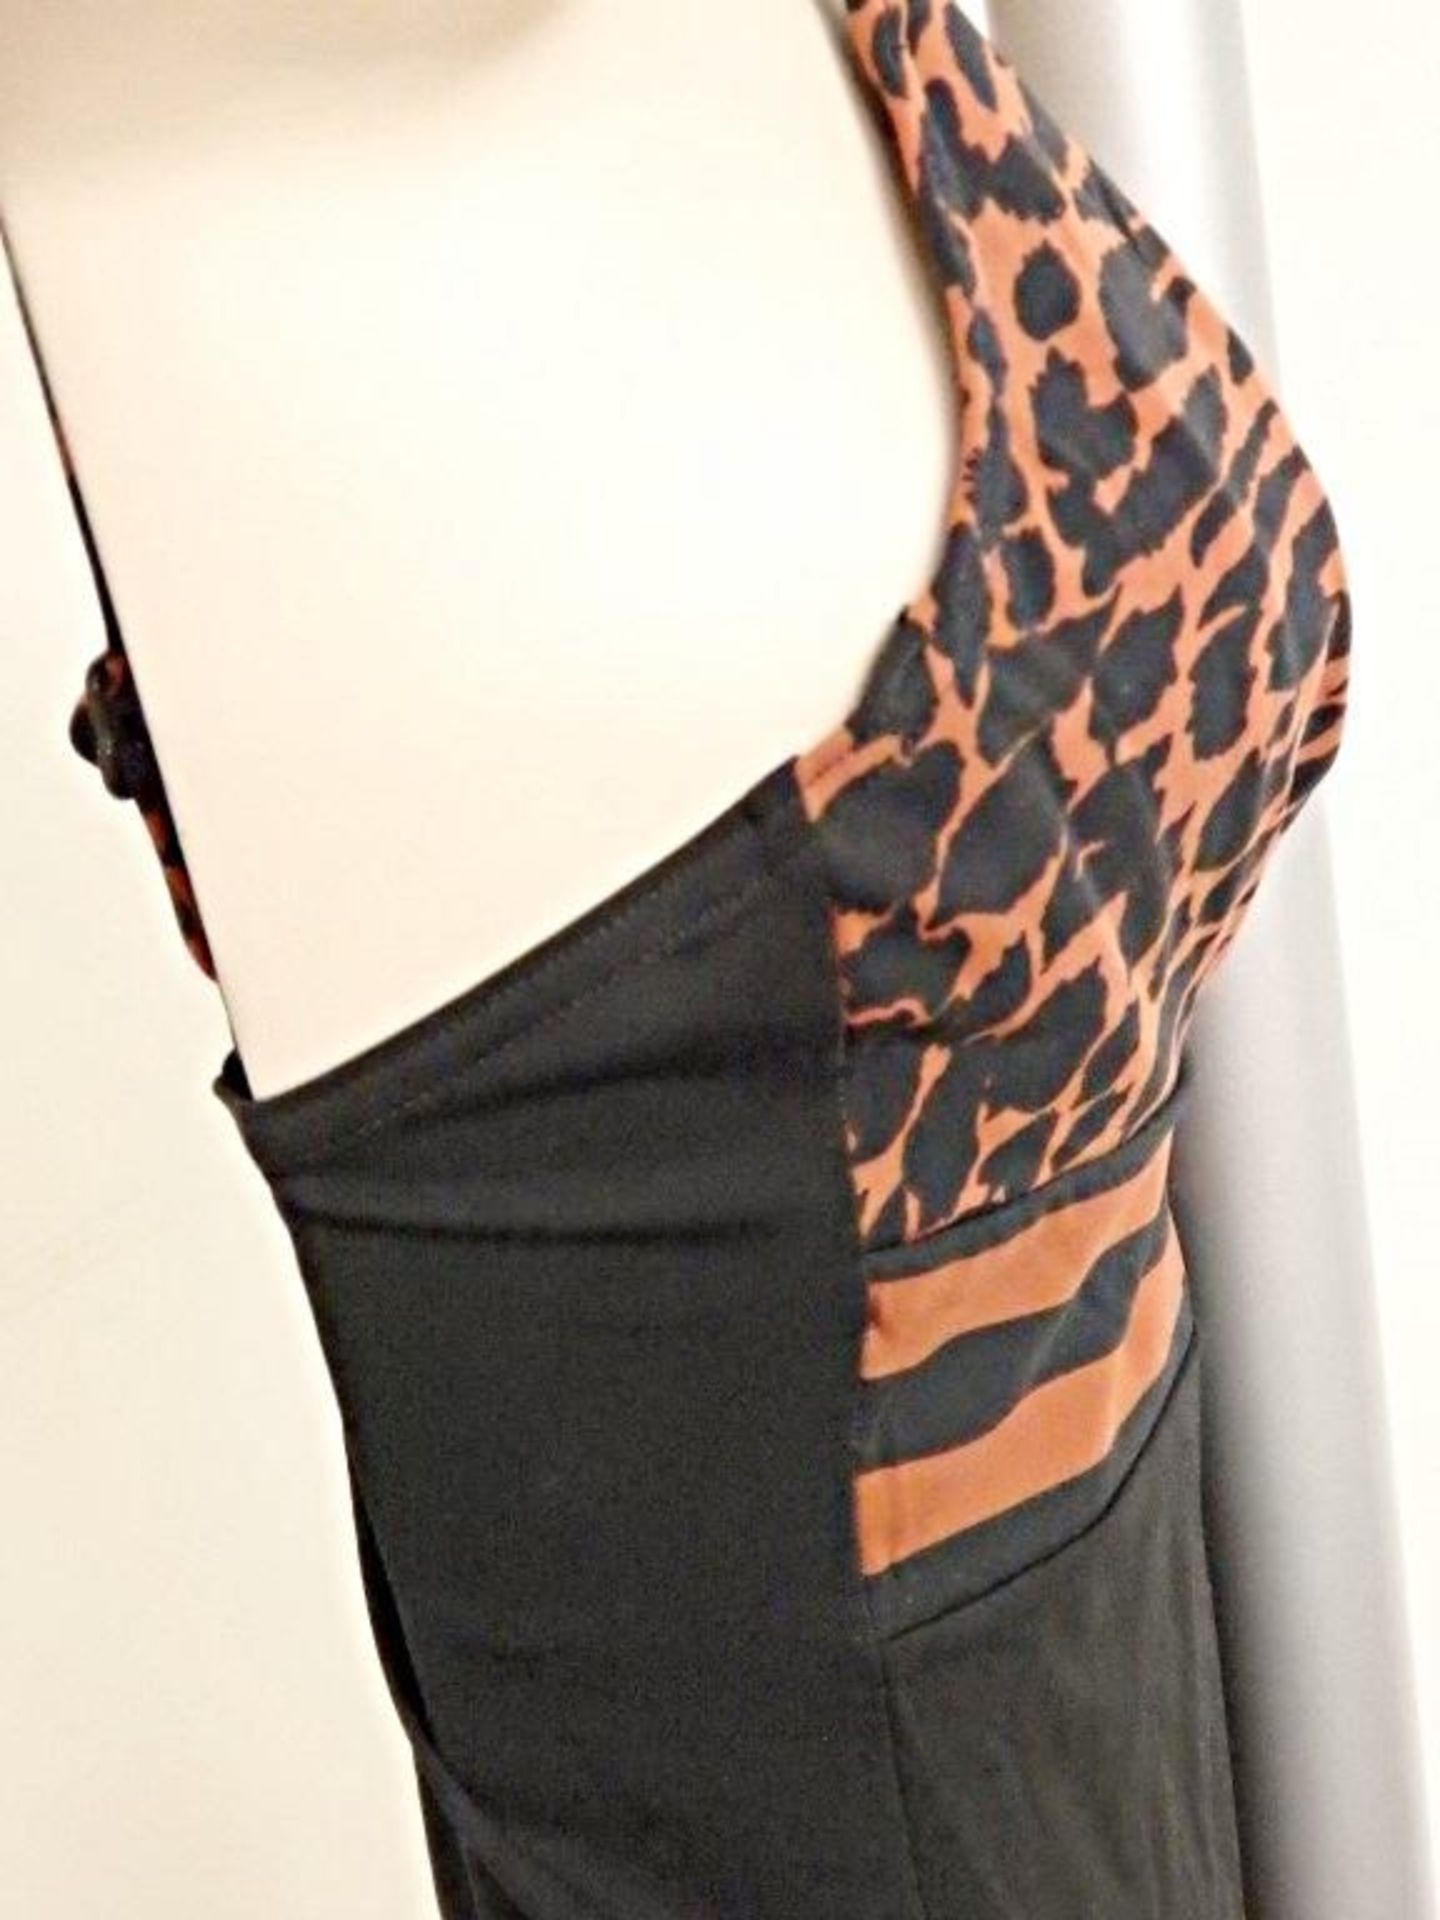 1 x Rasurel - Black/Tan Leopard and Stripe - Bahia Swimsuit - R21235 - Size 2C - UK 32 - Fr 85 - EU - Image 5 of 7